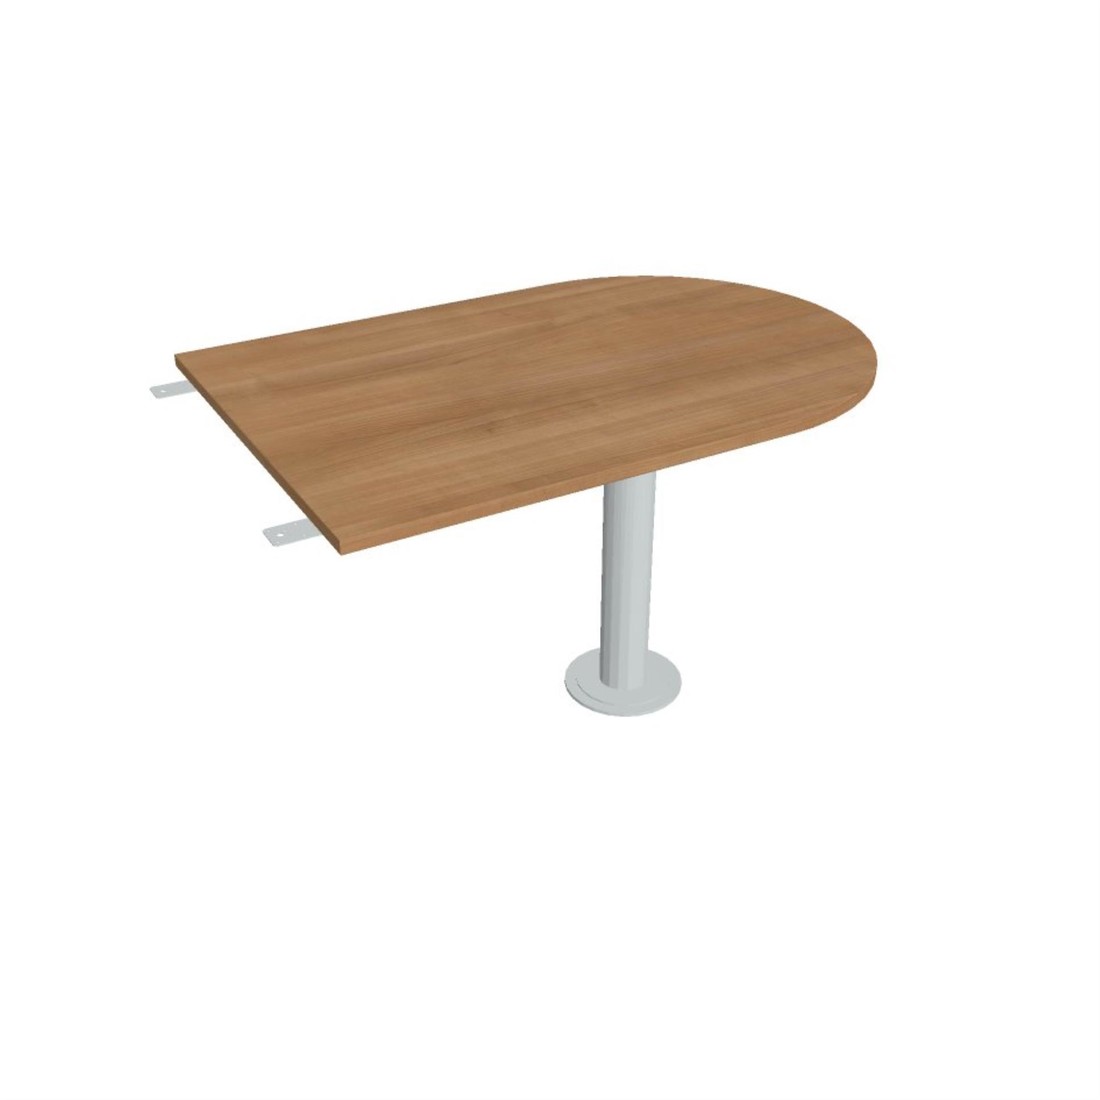 Přídavný stůl Hobis Flex FP 1200 3 - višeň/kov 120 x 80 x 75 cm